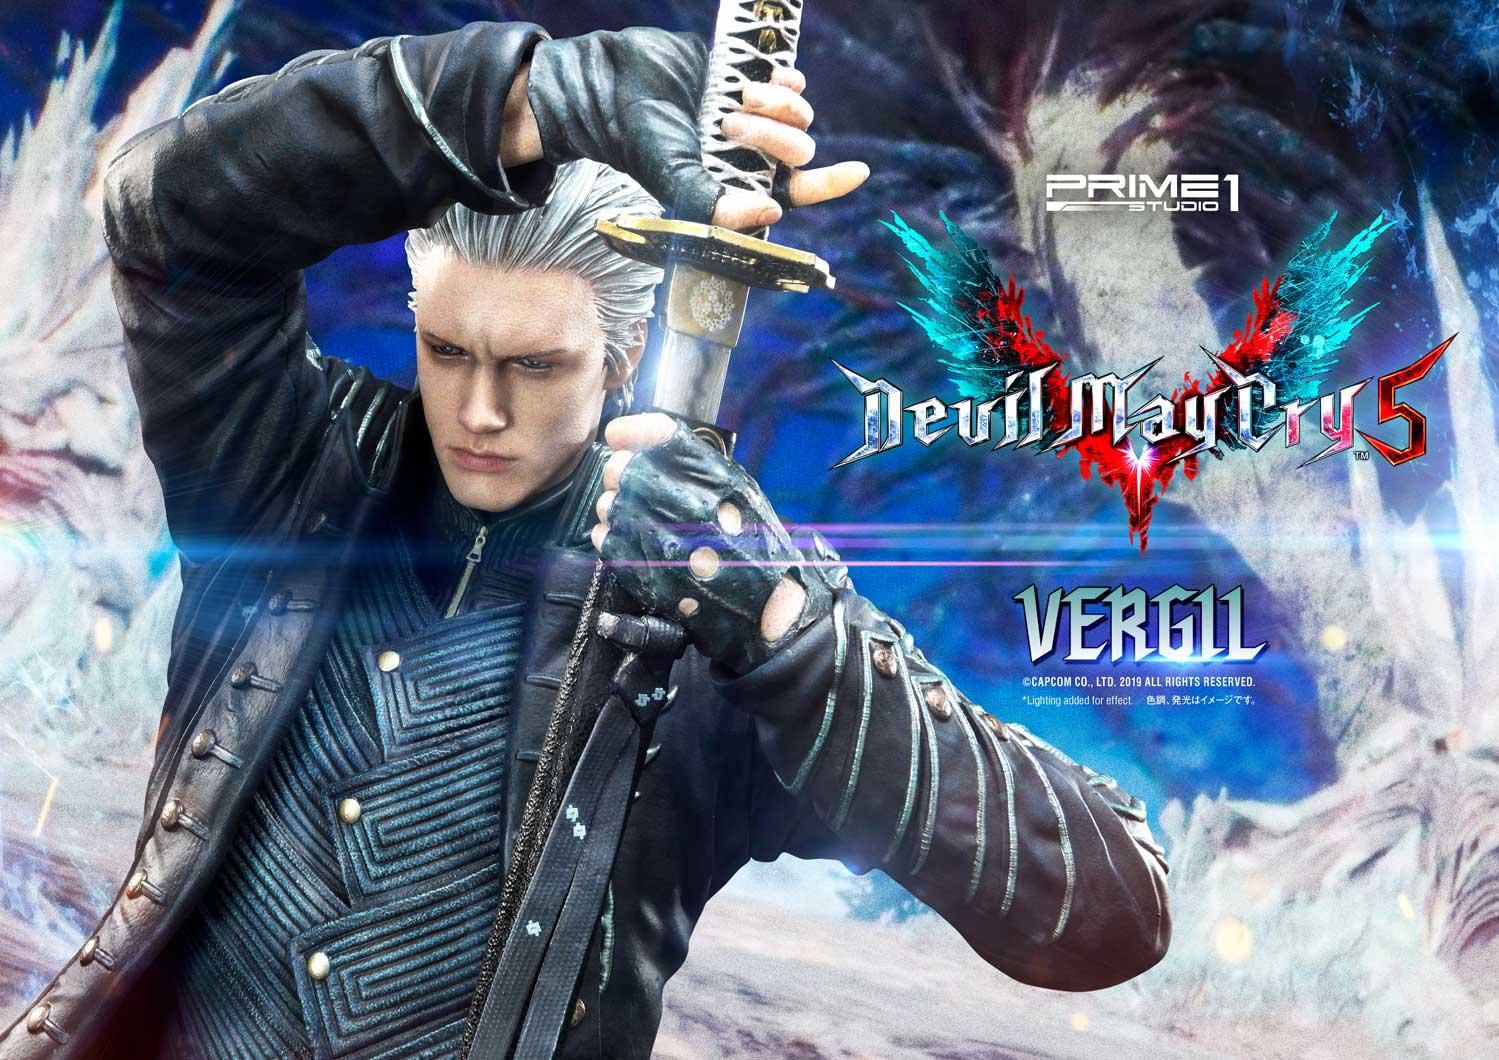 Jogamos Devil May Cry 5 Special Edition com Vergil